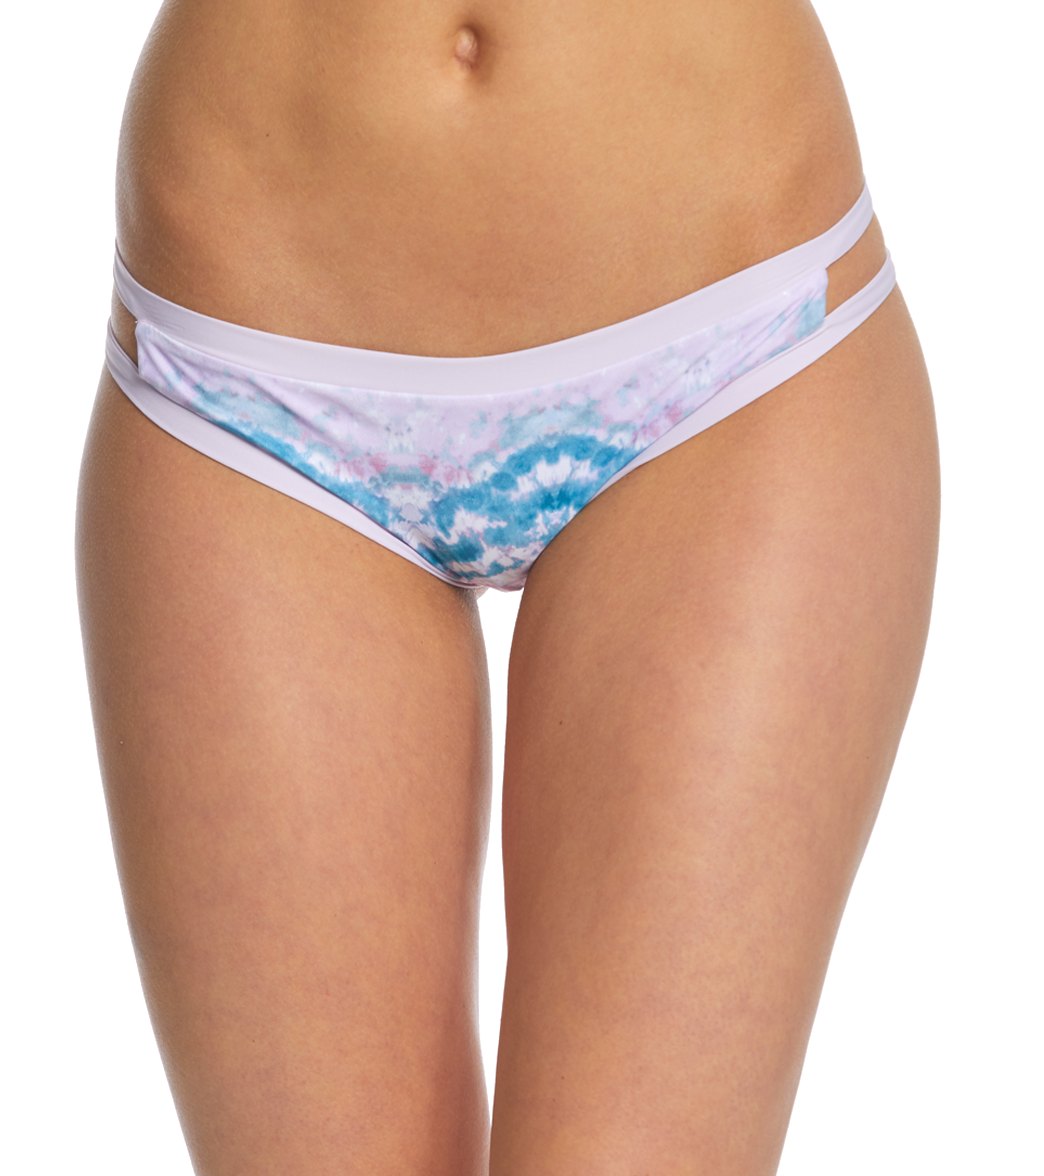 B.swim Makai Tie Dye Florida Flip Reversible Bikini Bottom - Medium - Swimoutlet.com